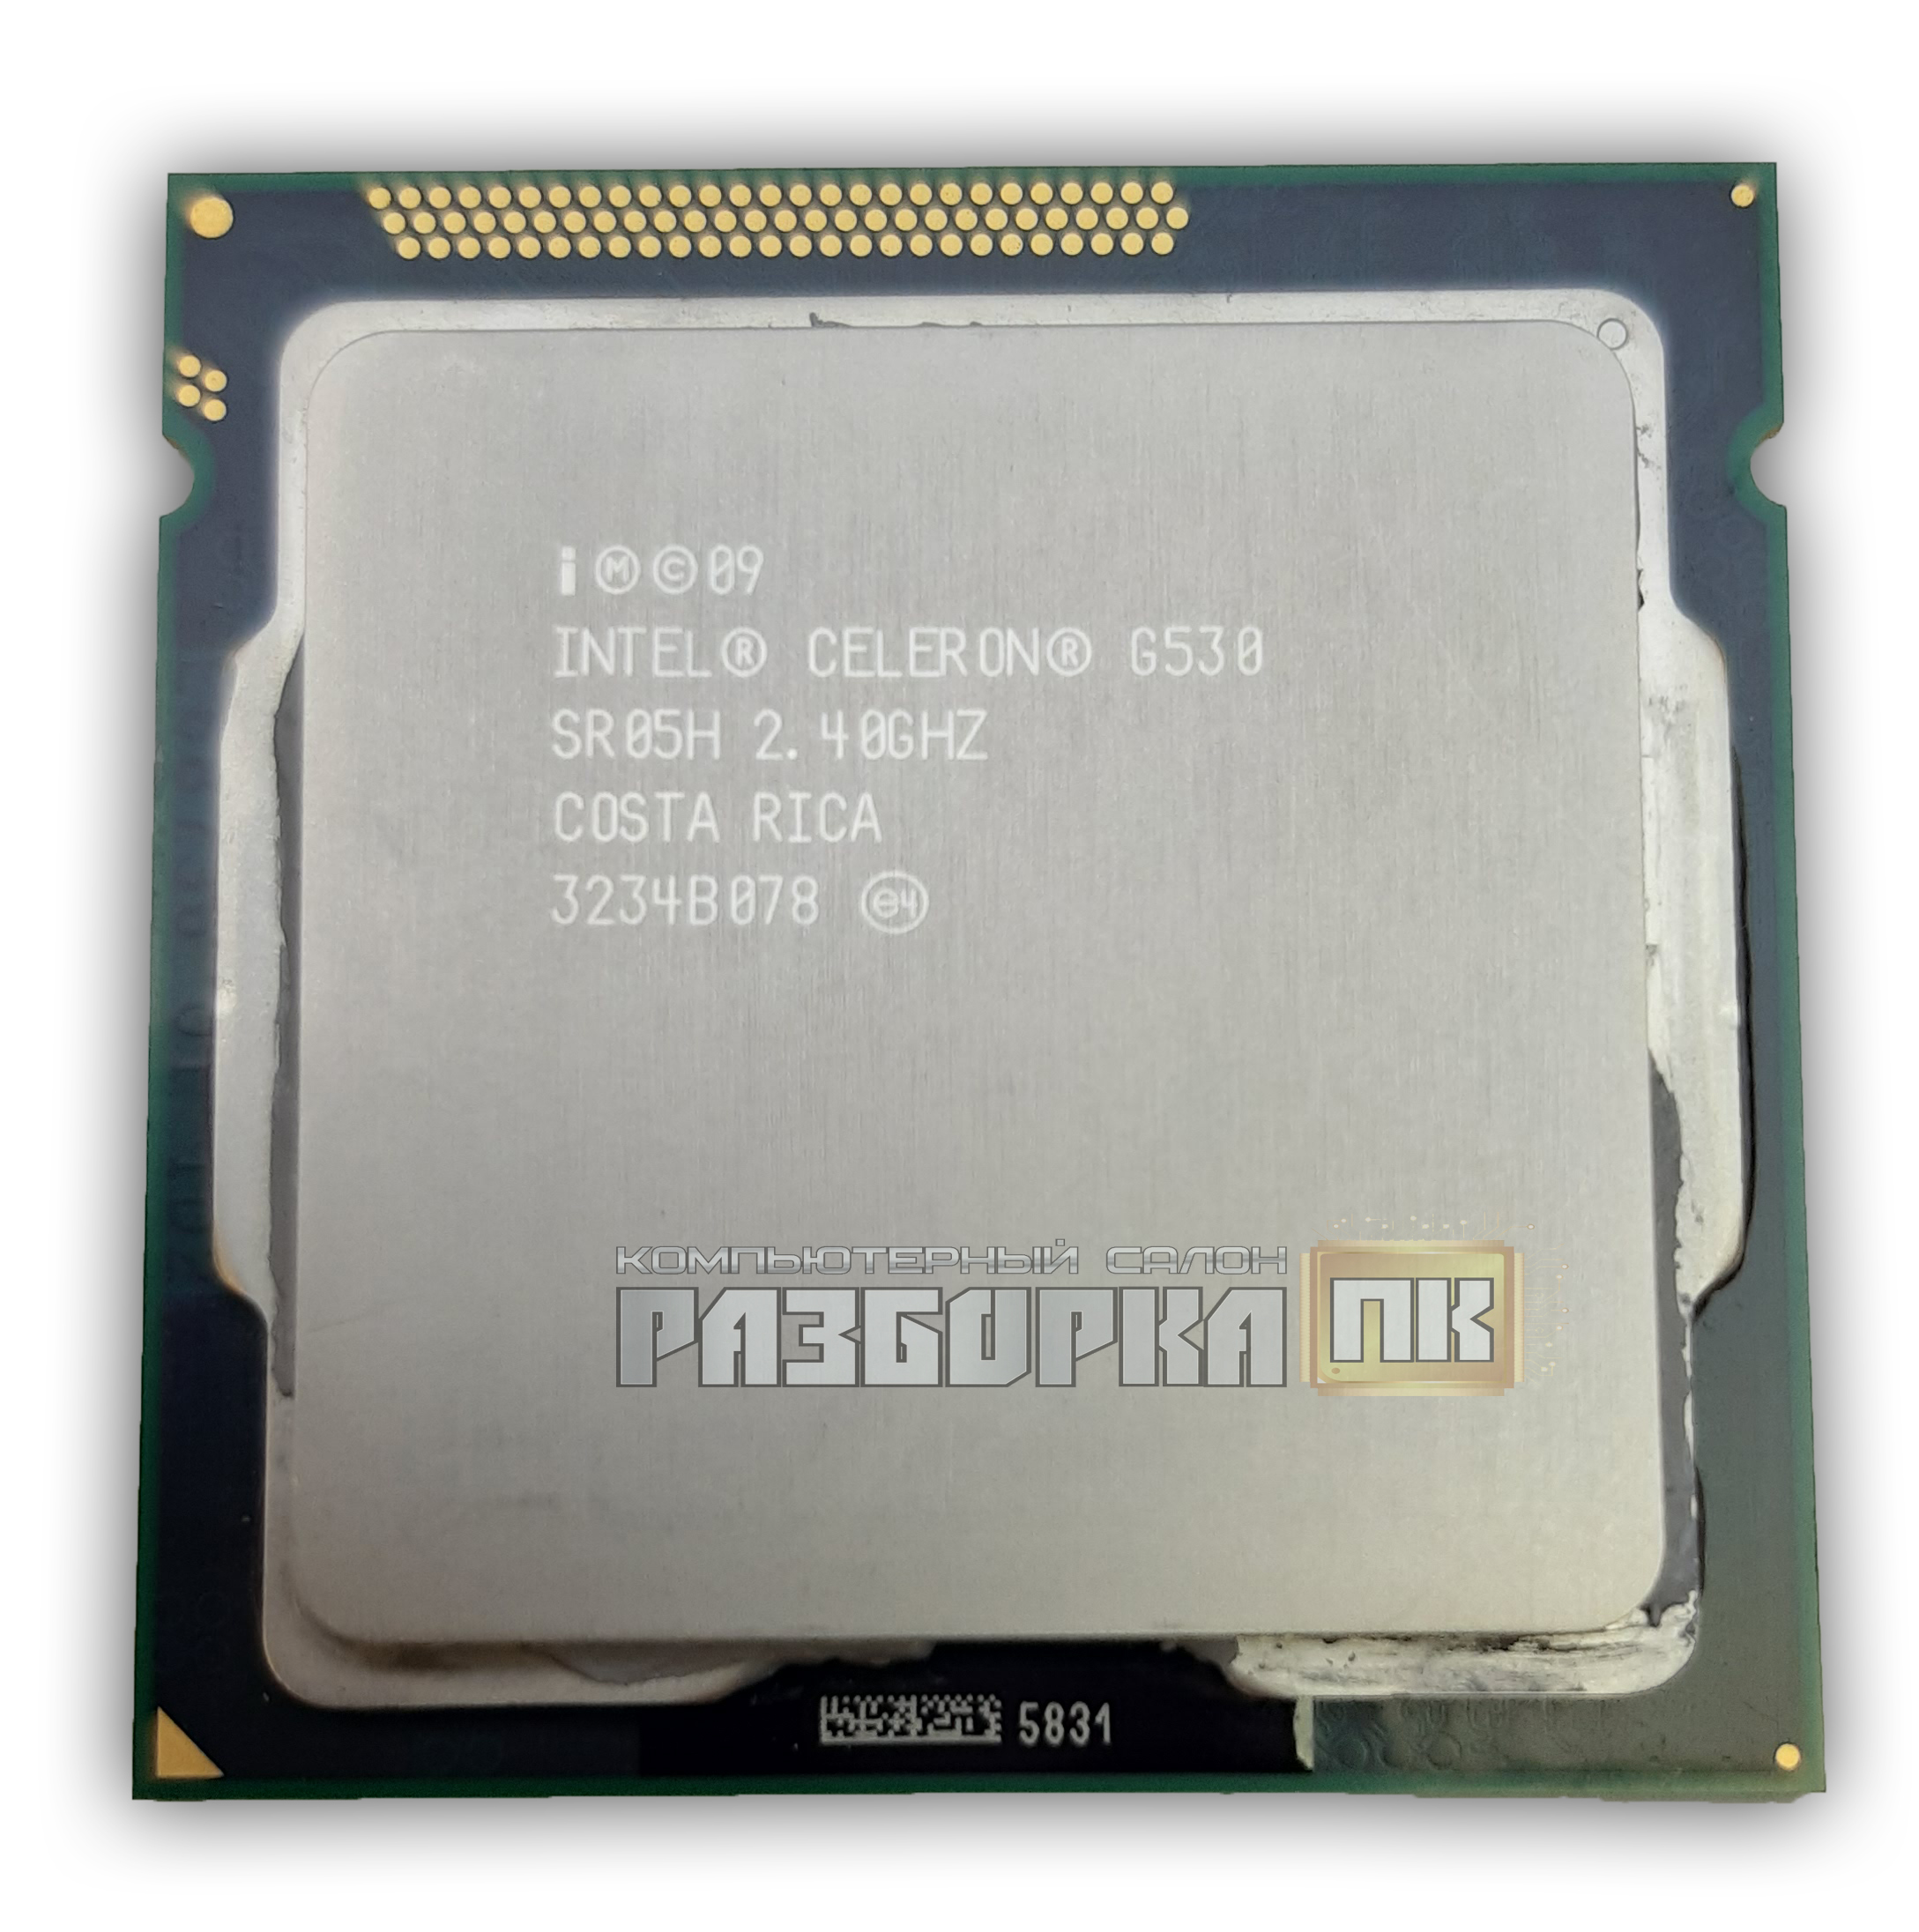 Процессор s1155 Intel Celeron G530